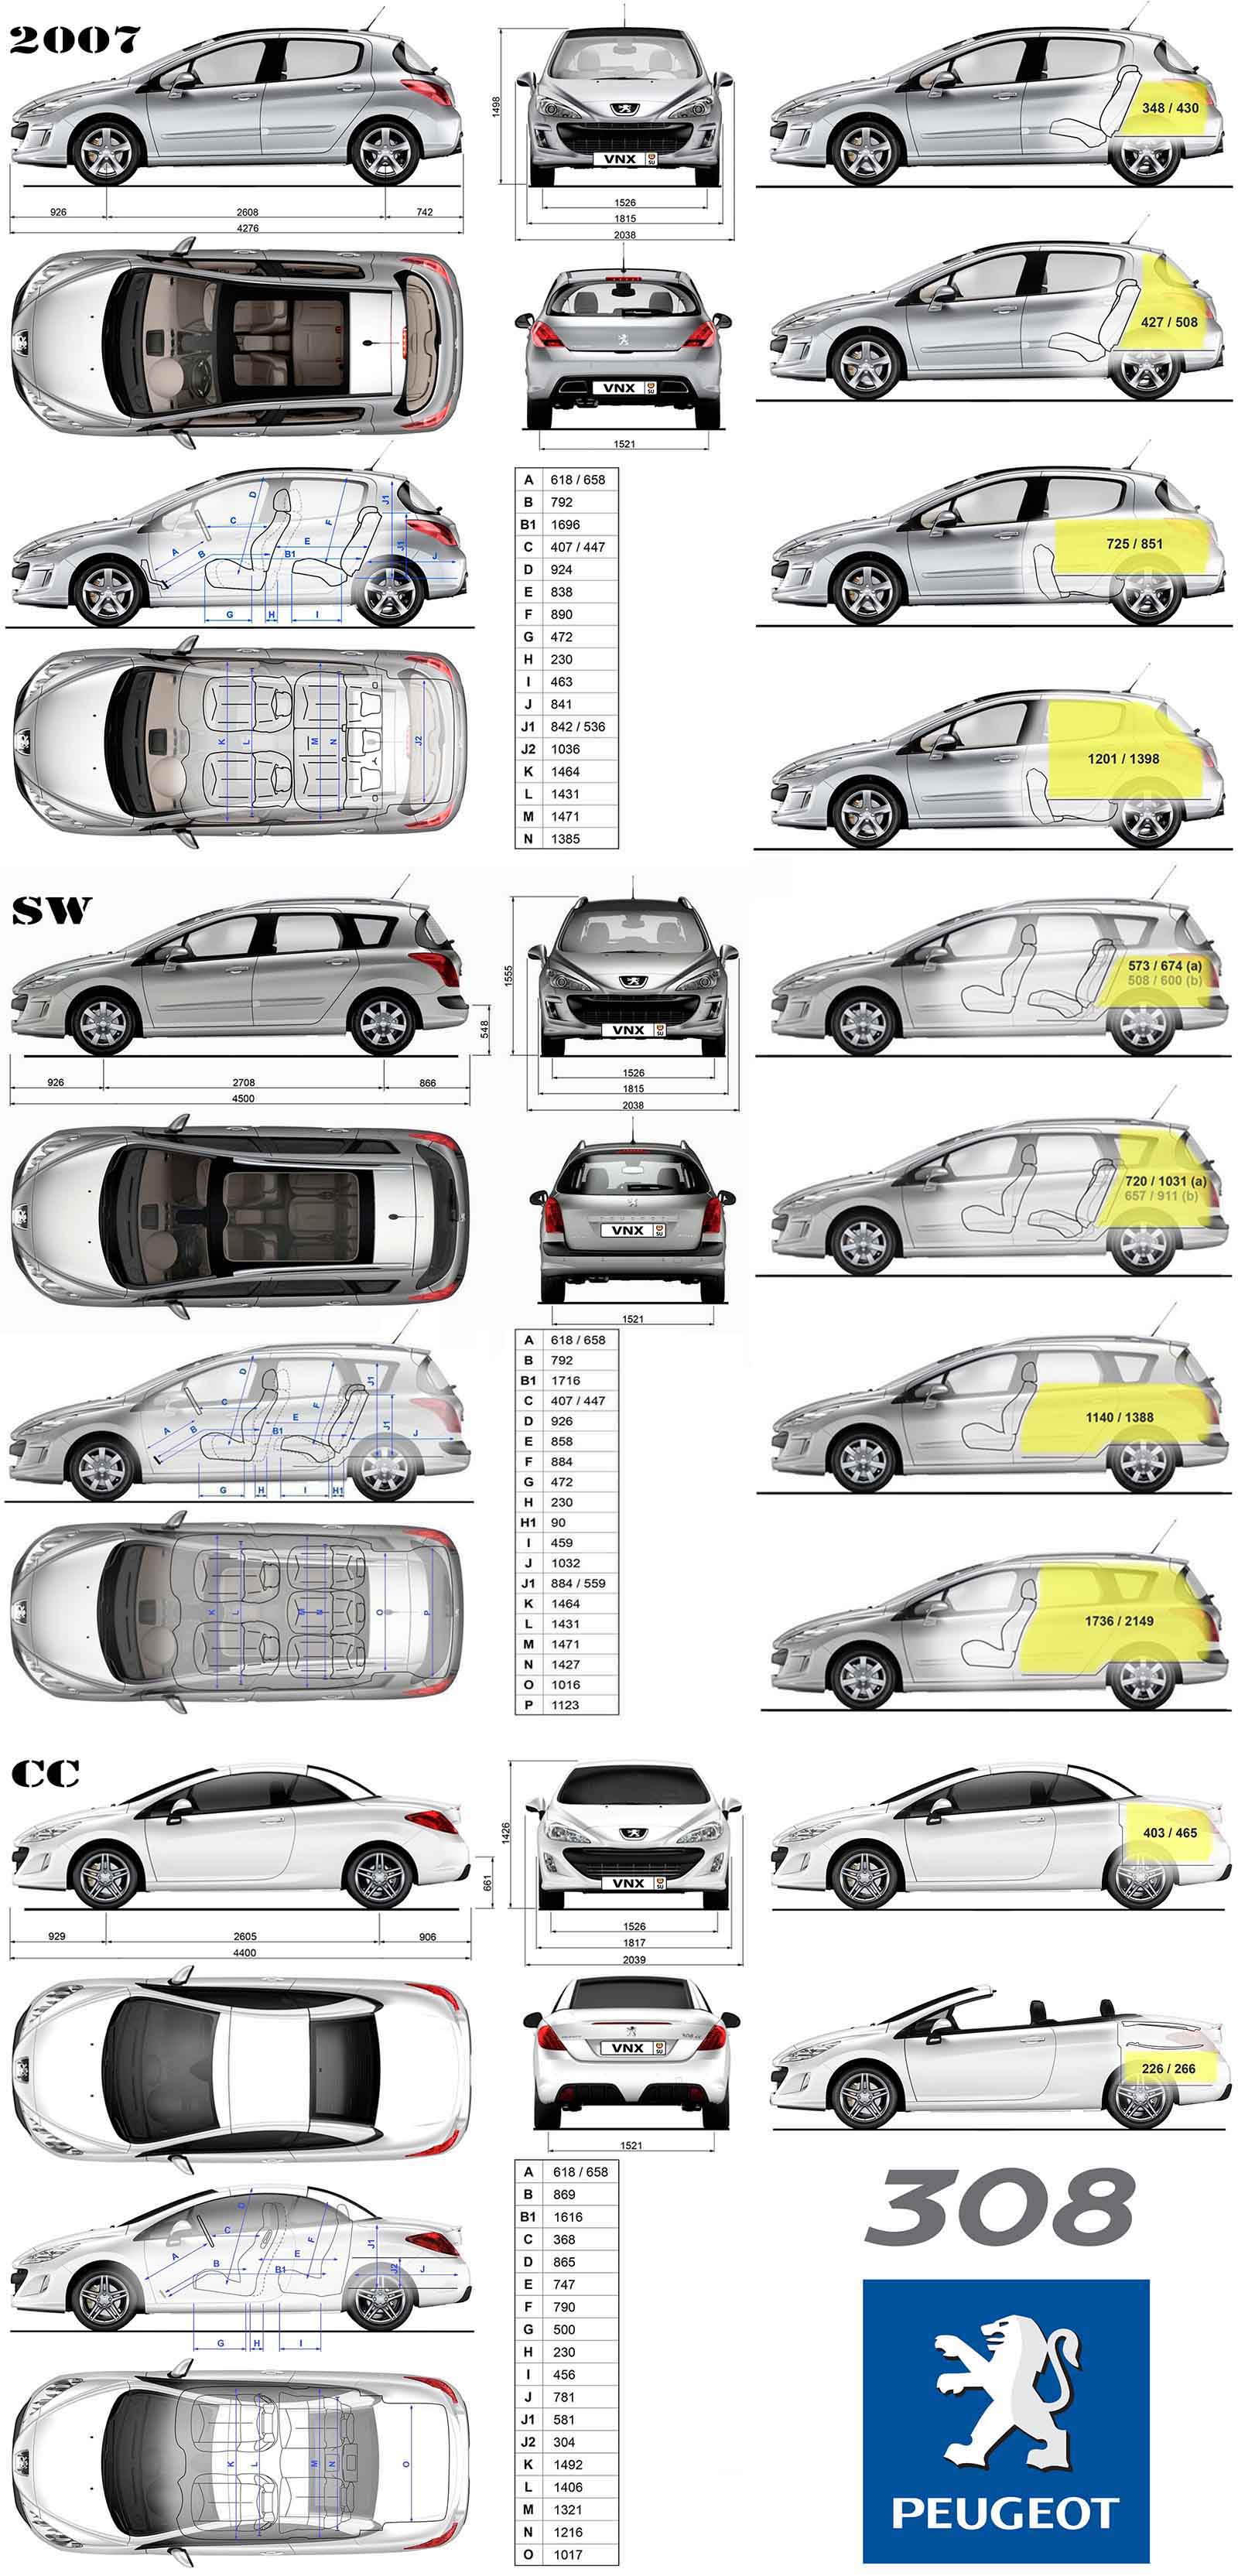 Габаритные размеры Пежо 308 2007-2011 (dimensions Peugeot 308 T7)